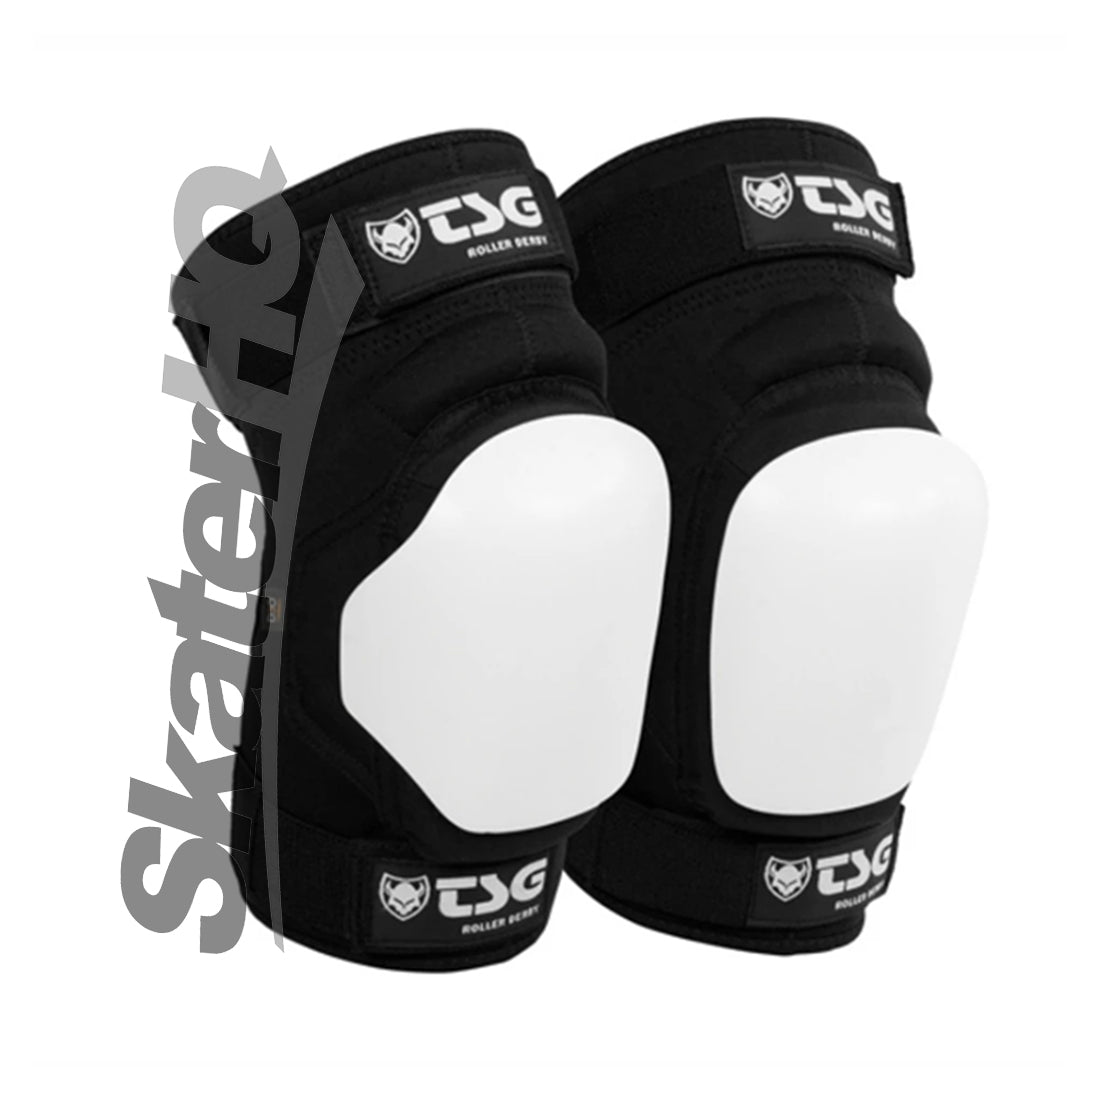 TSG Rollerderby Knee - Medium Protective Gear